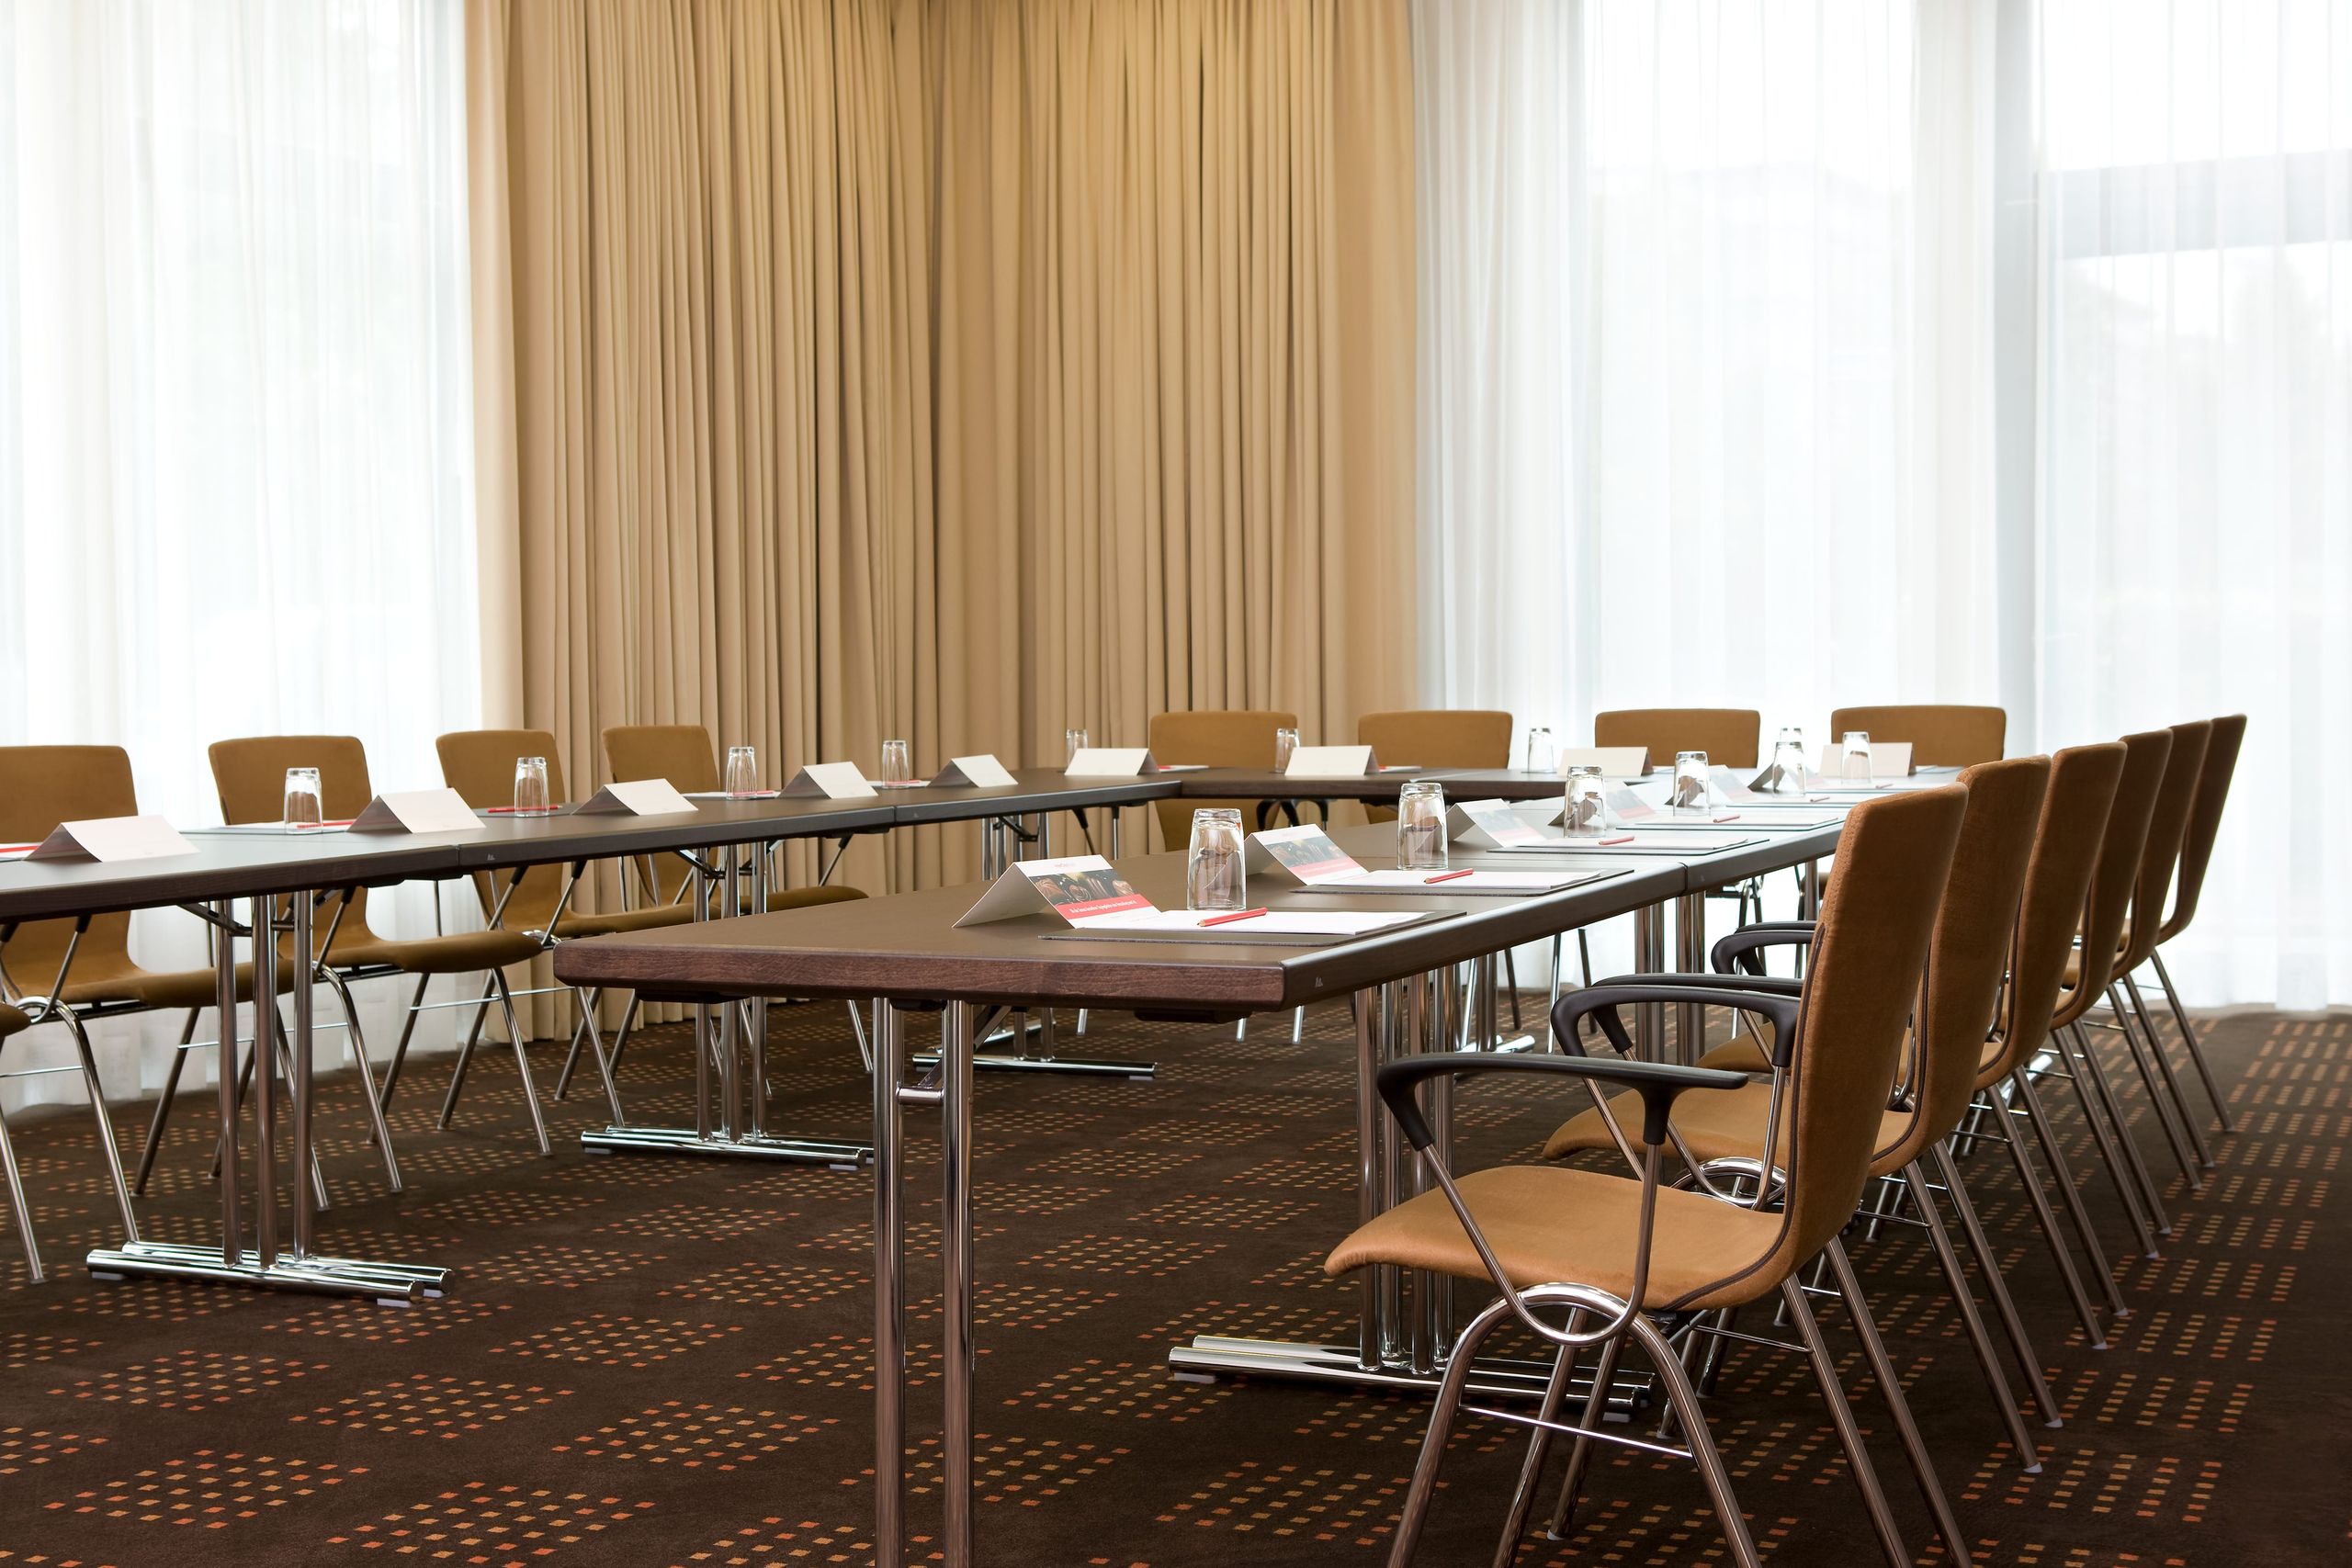 IntercityHotel Essen – meetings & events